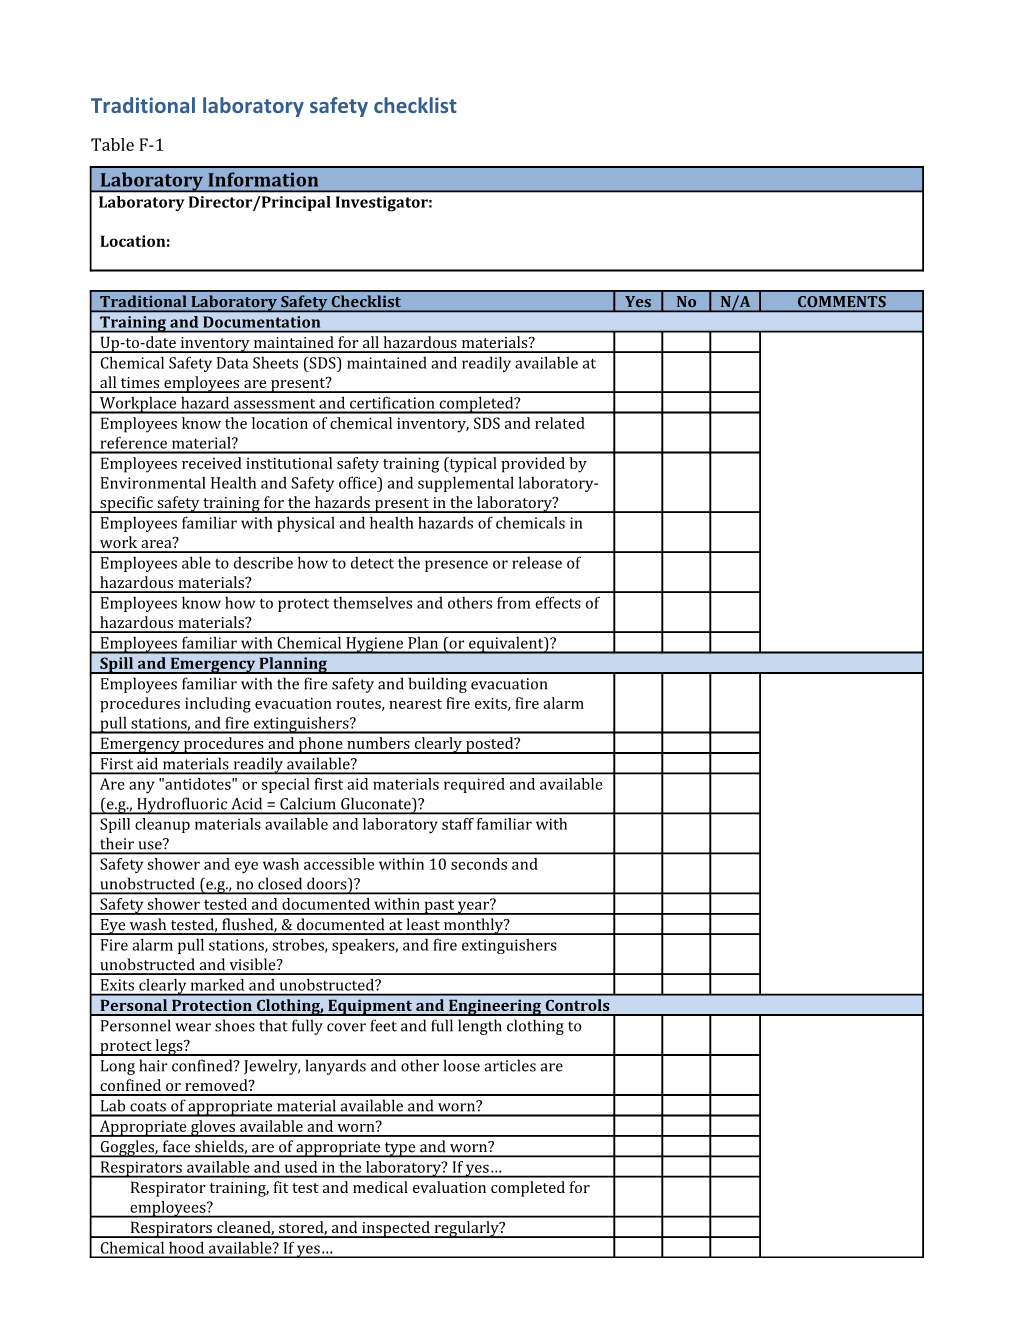 Traditional Laboratory Safety Checklist